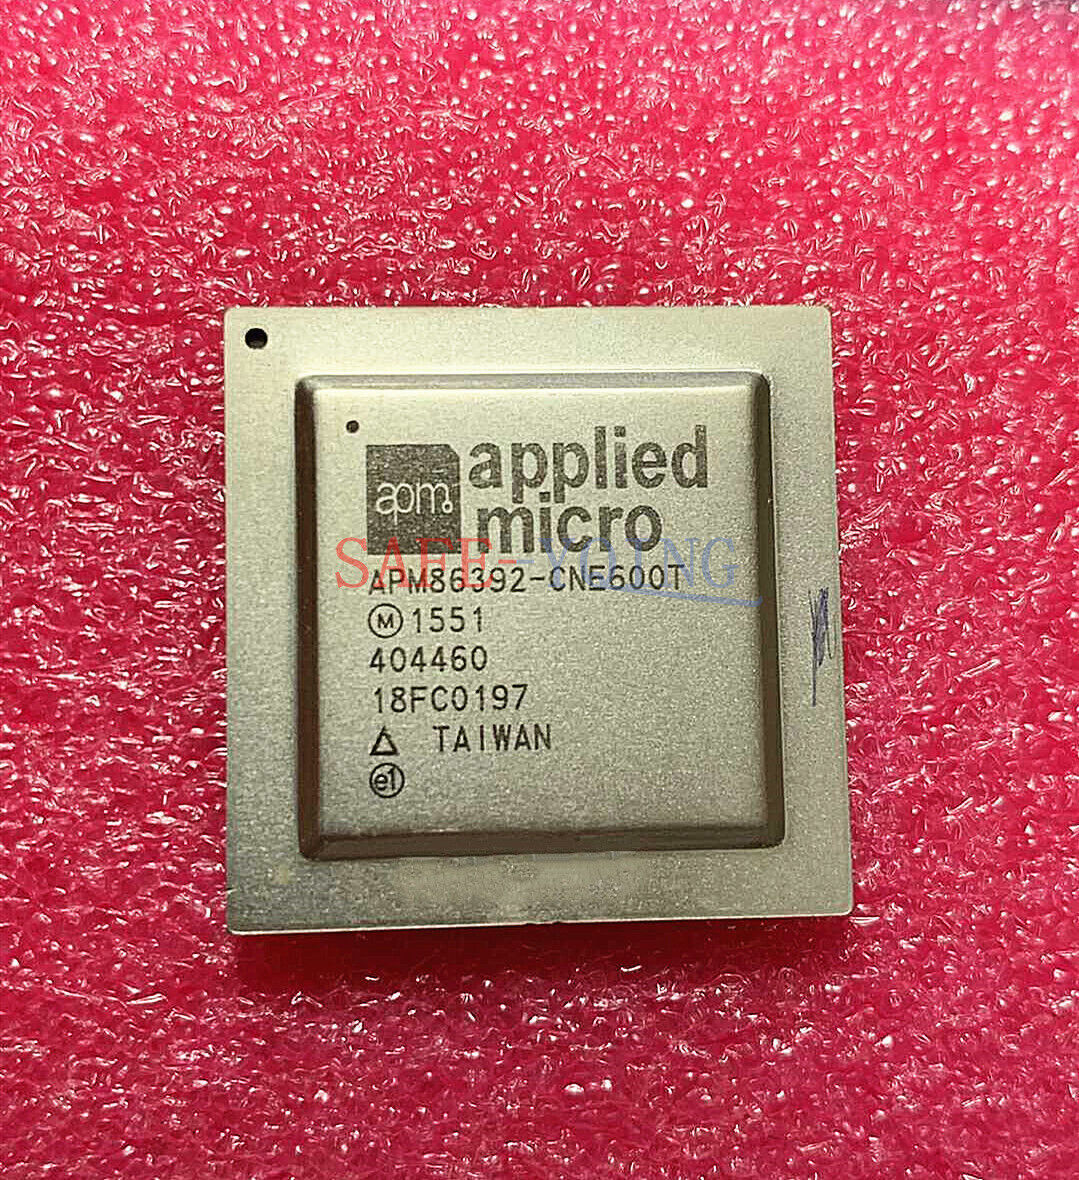 1PCS APM86392-CNE600T applied micro BGA NEW #D1